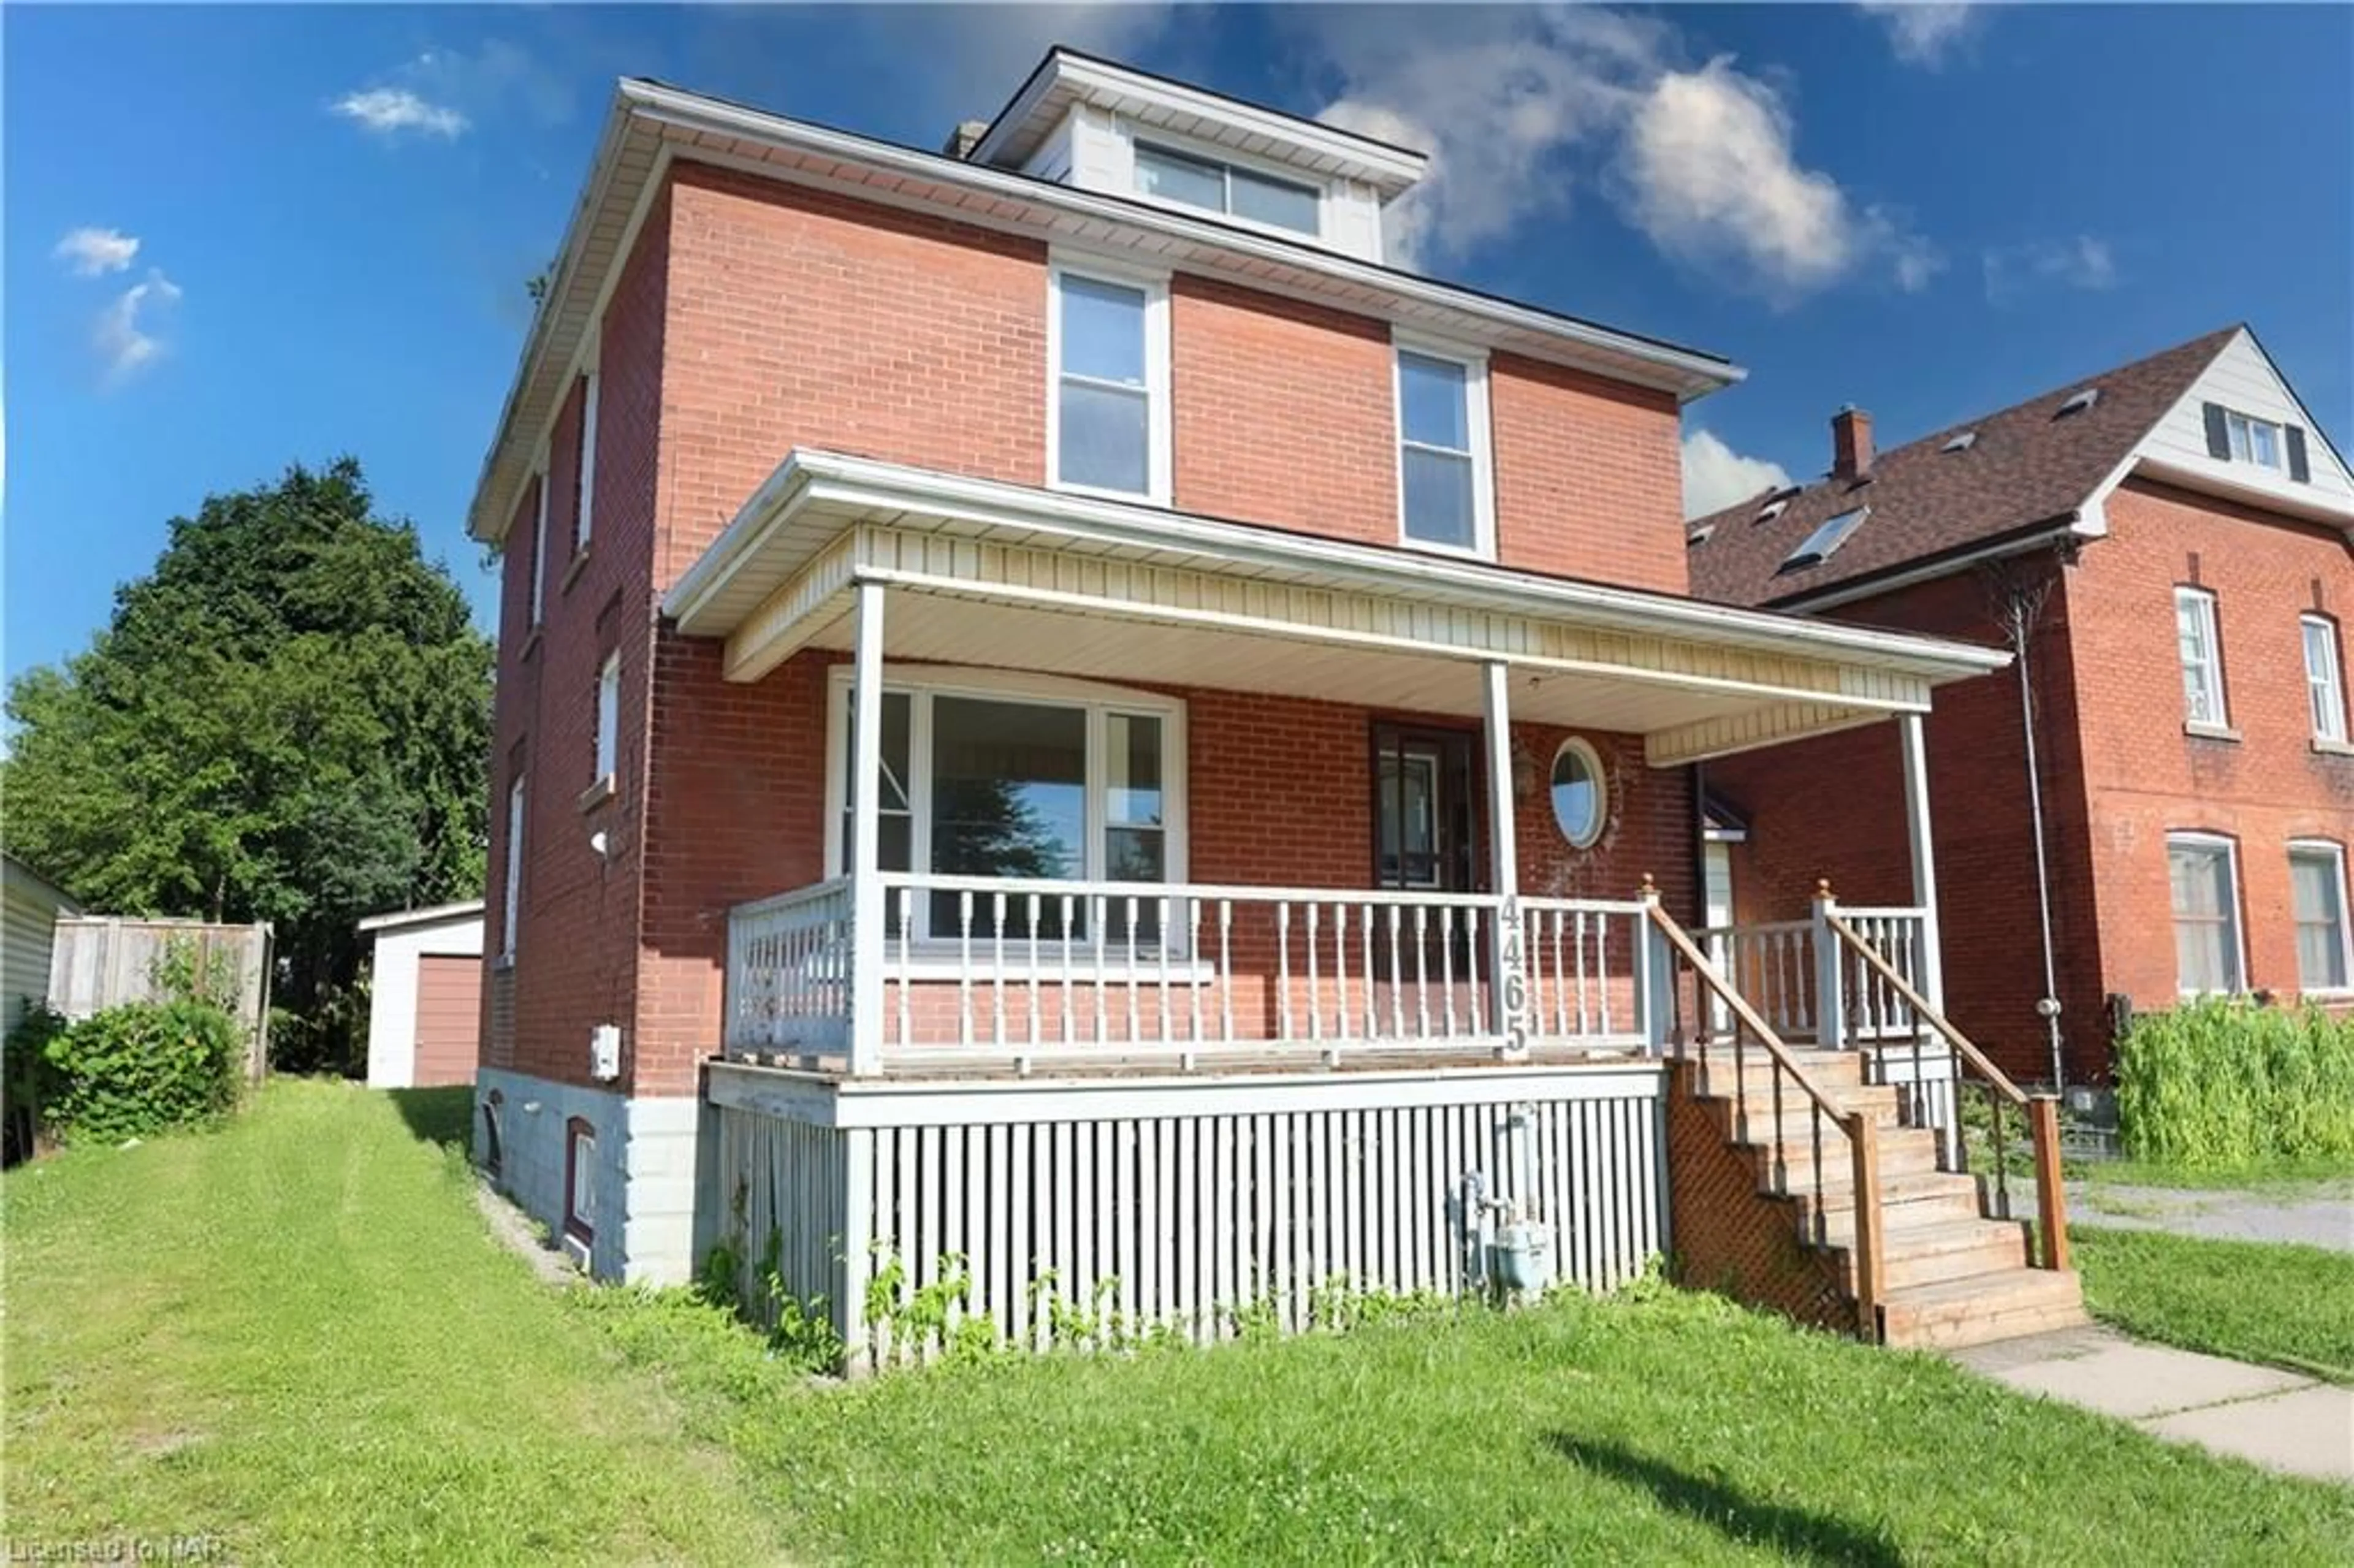 Home with brick exterior material for 4465 Fifth Ave, Niagara Falls Ontario L2E 4R5